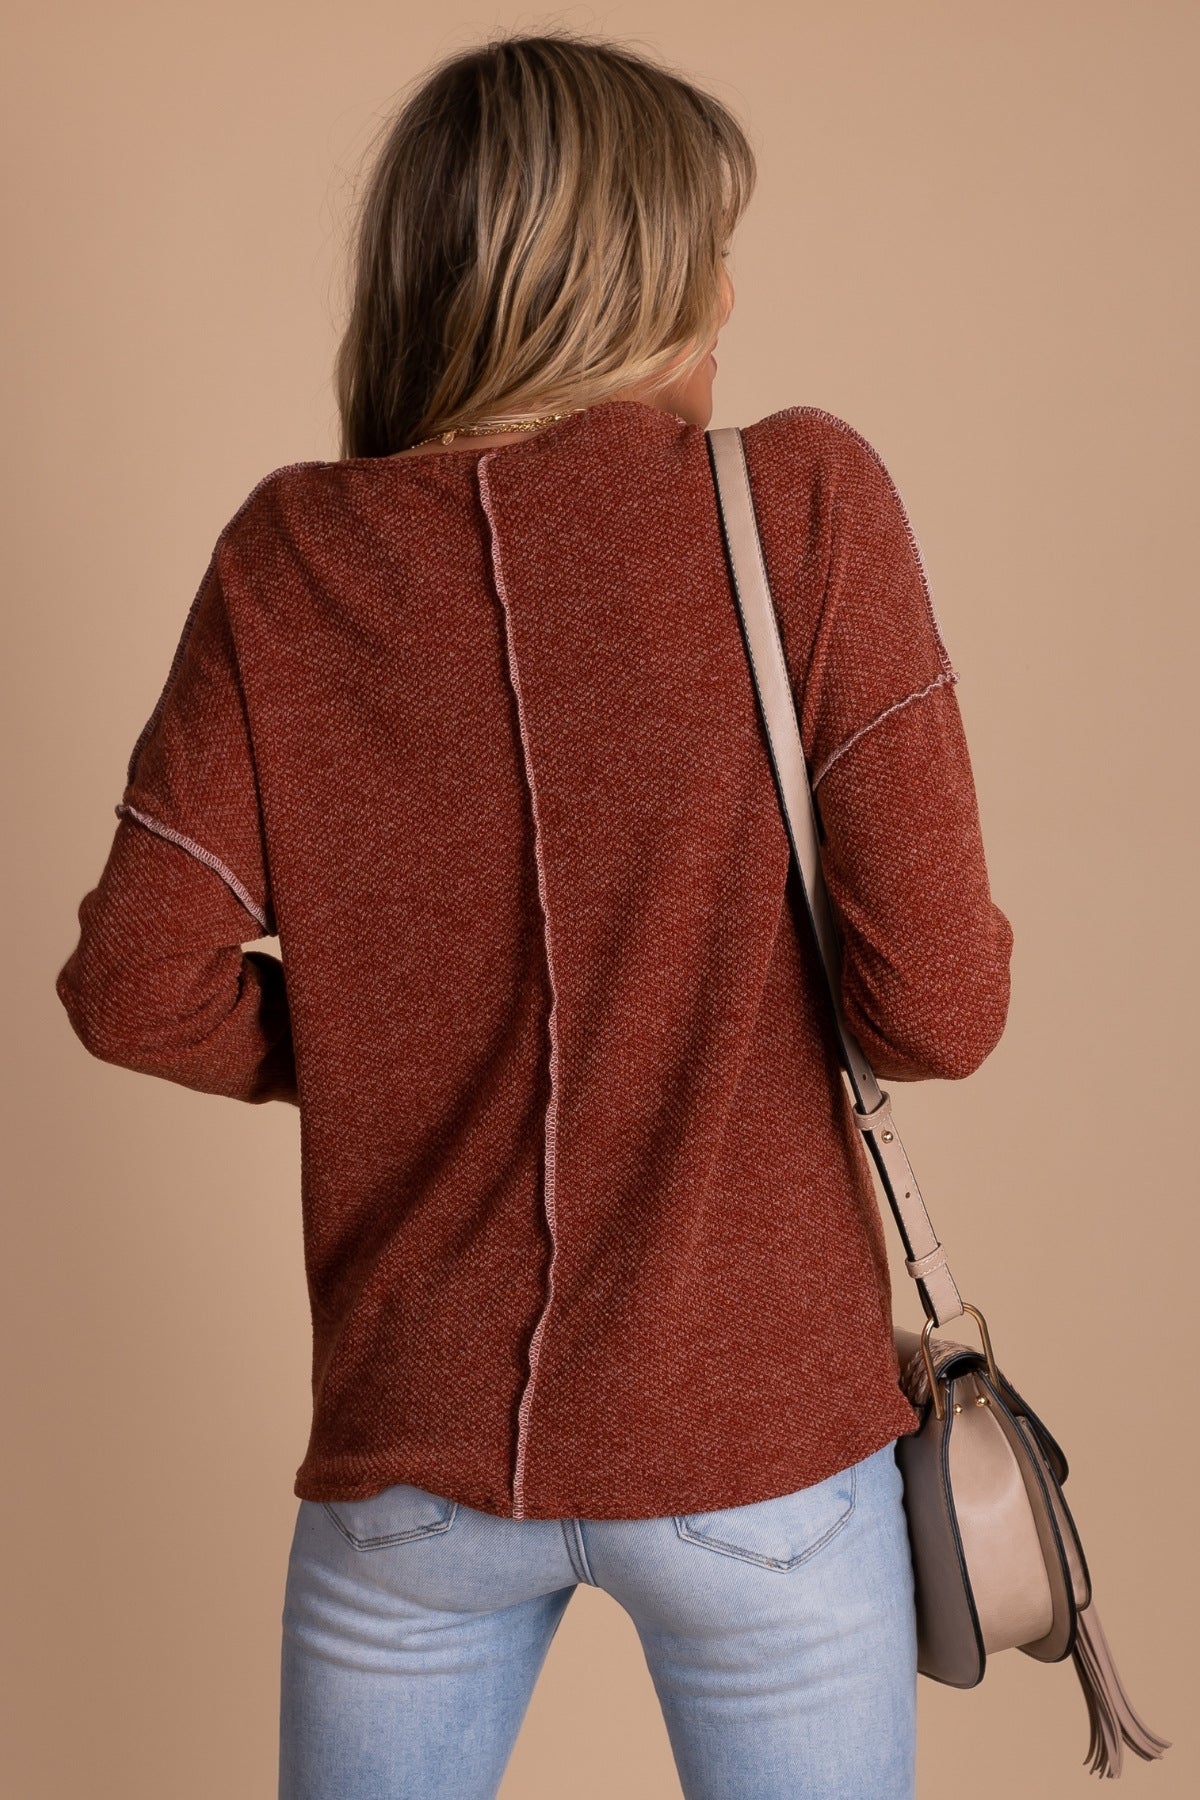 Rust Red-Orange Long Sleeve Knit Sweater for Women